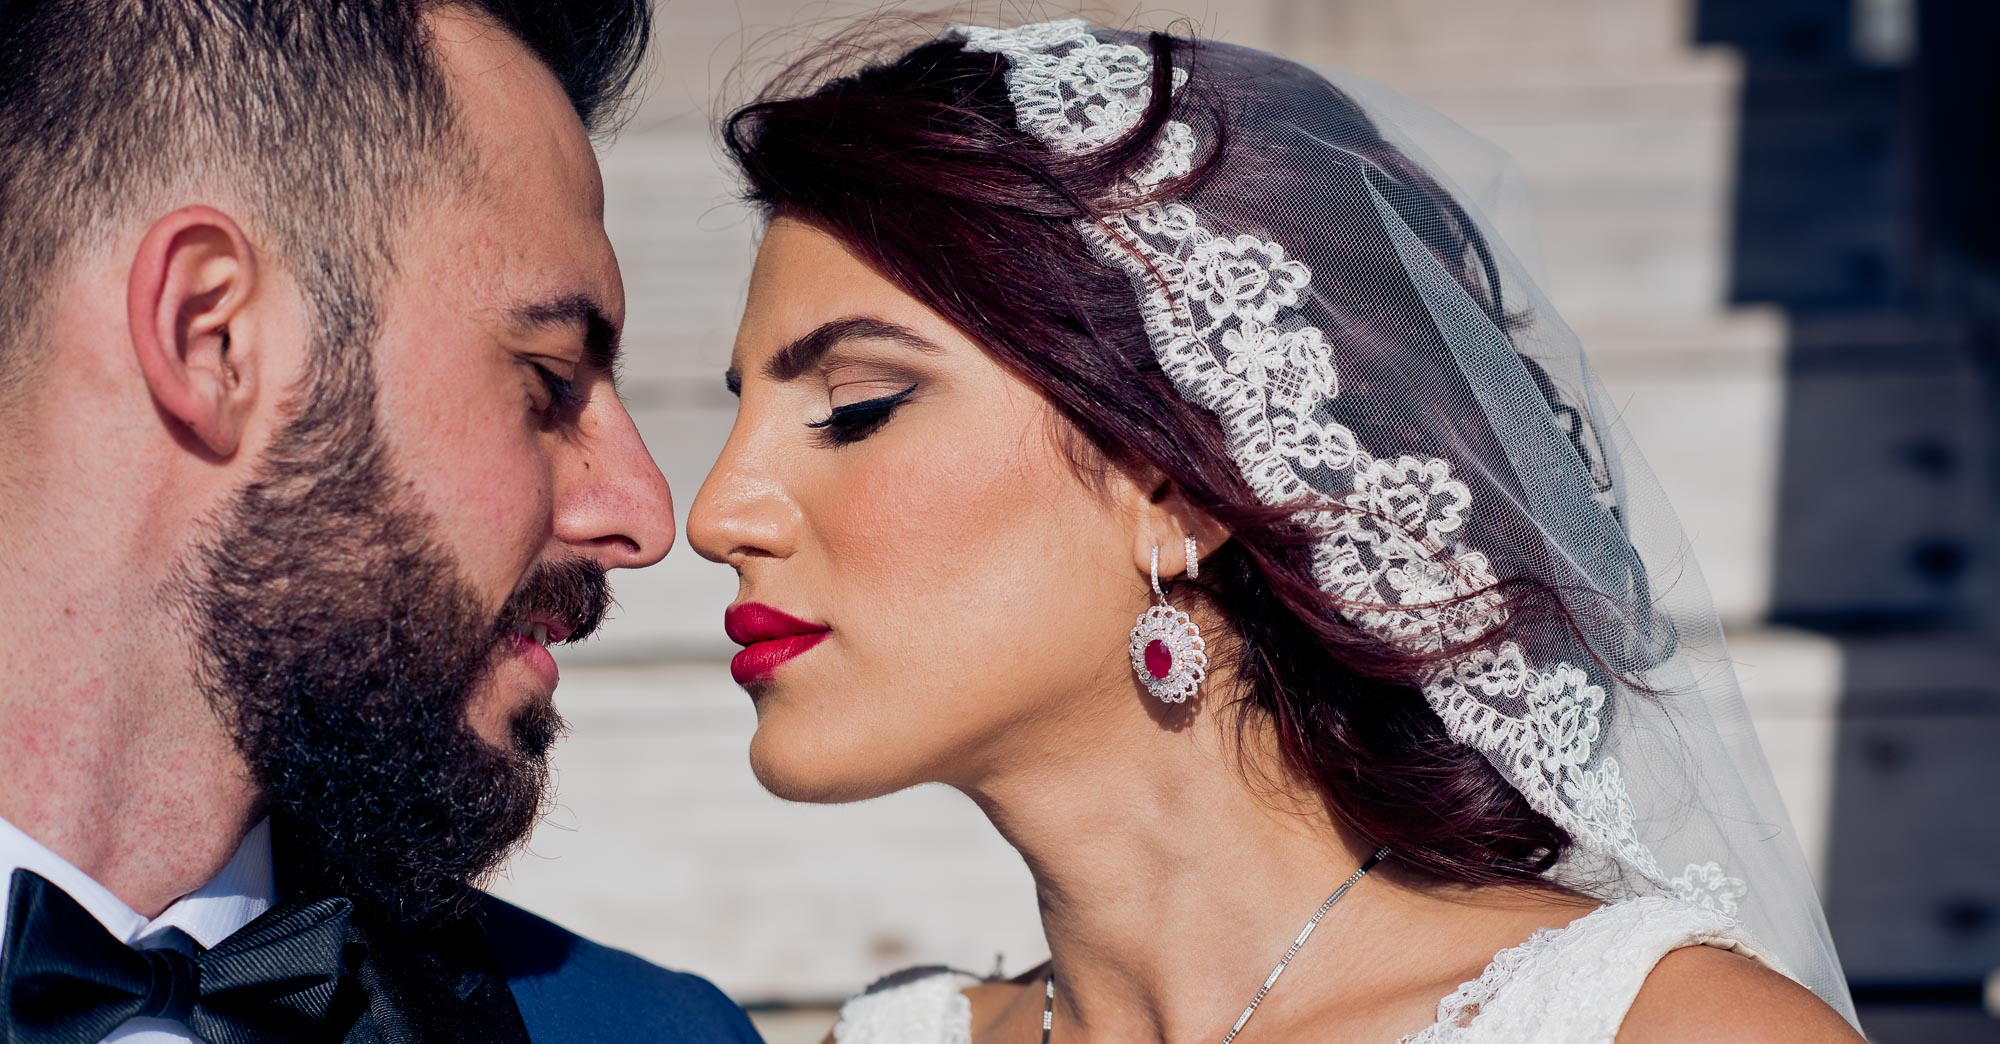 Layla & Ahmed – Surf & Sand Resort Wedding featured slider image